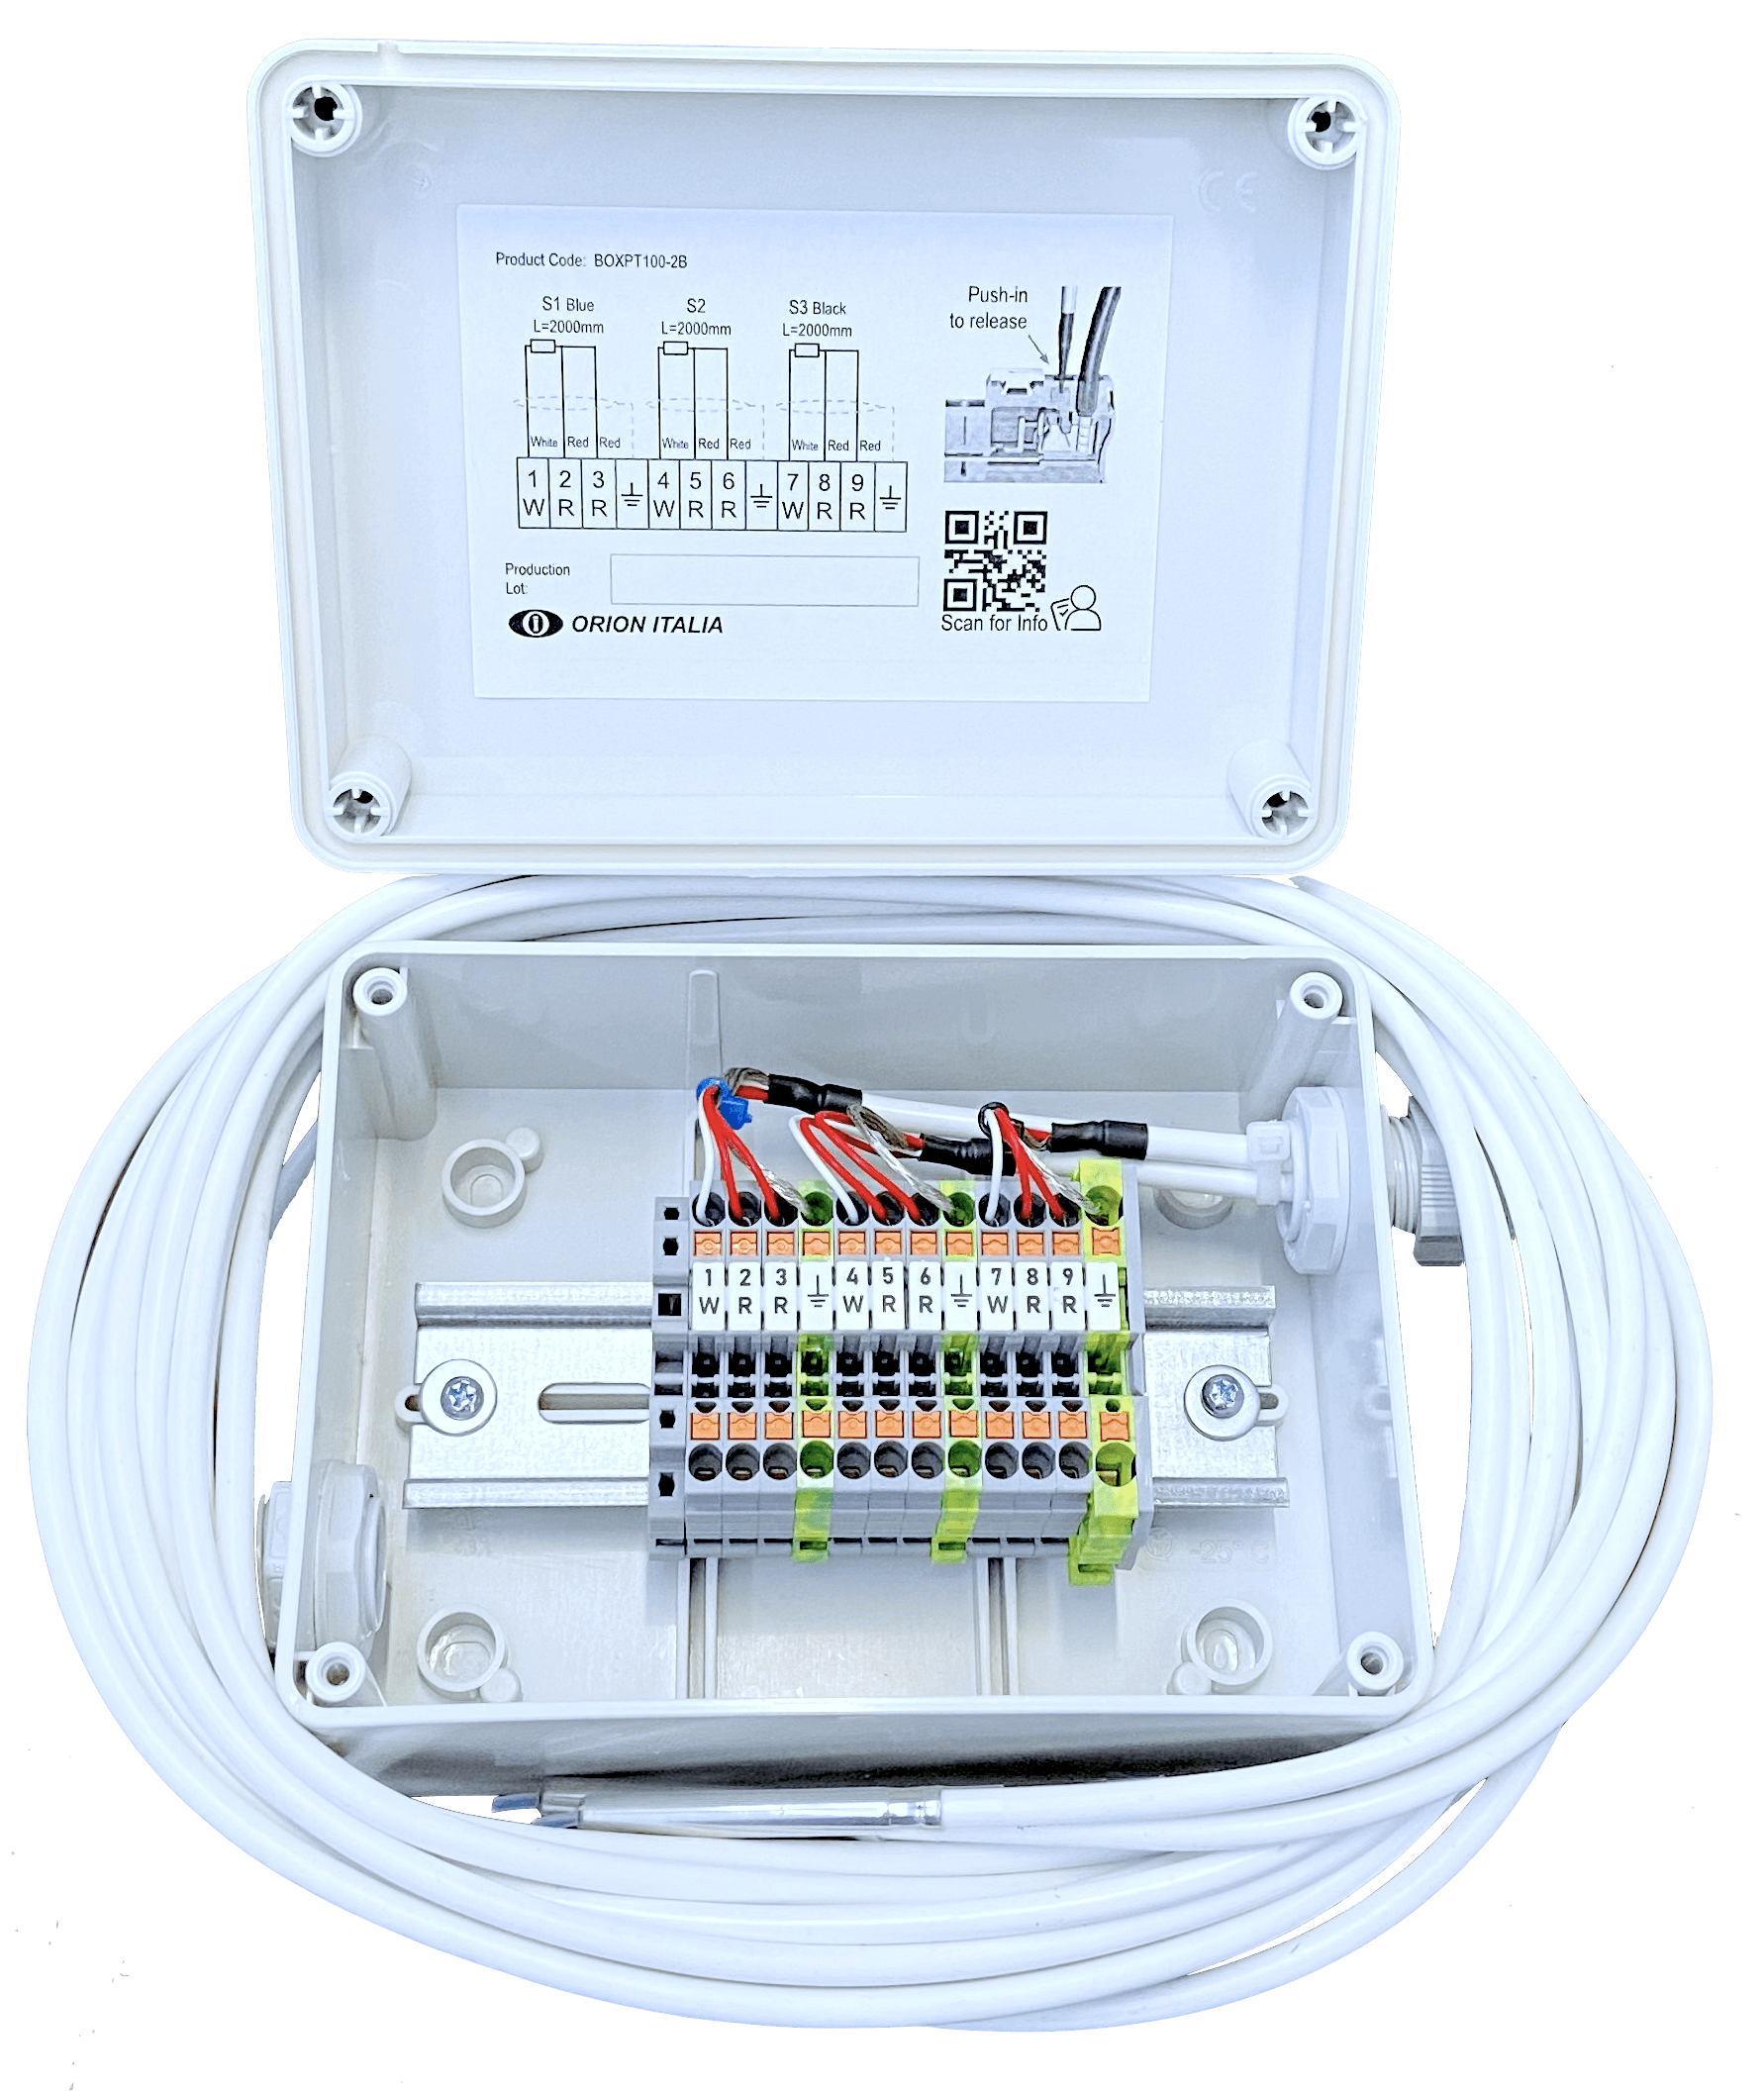 Caja de bornes PTbox - sensores PT 100 - Sondas - Vigilancia de Temperatura - Transformadores de potencia aislados en resina - TR-42 - PTbox